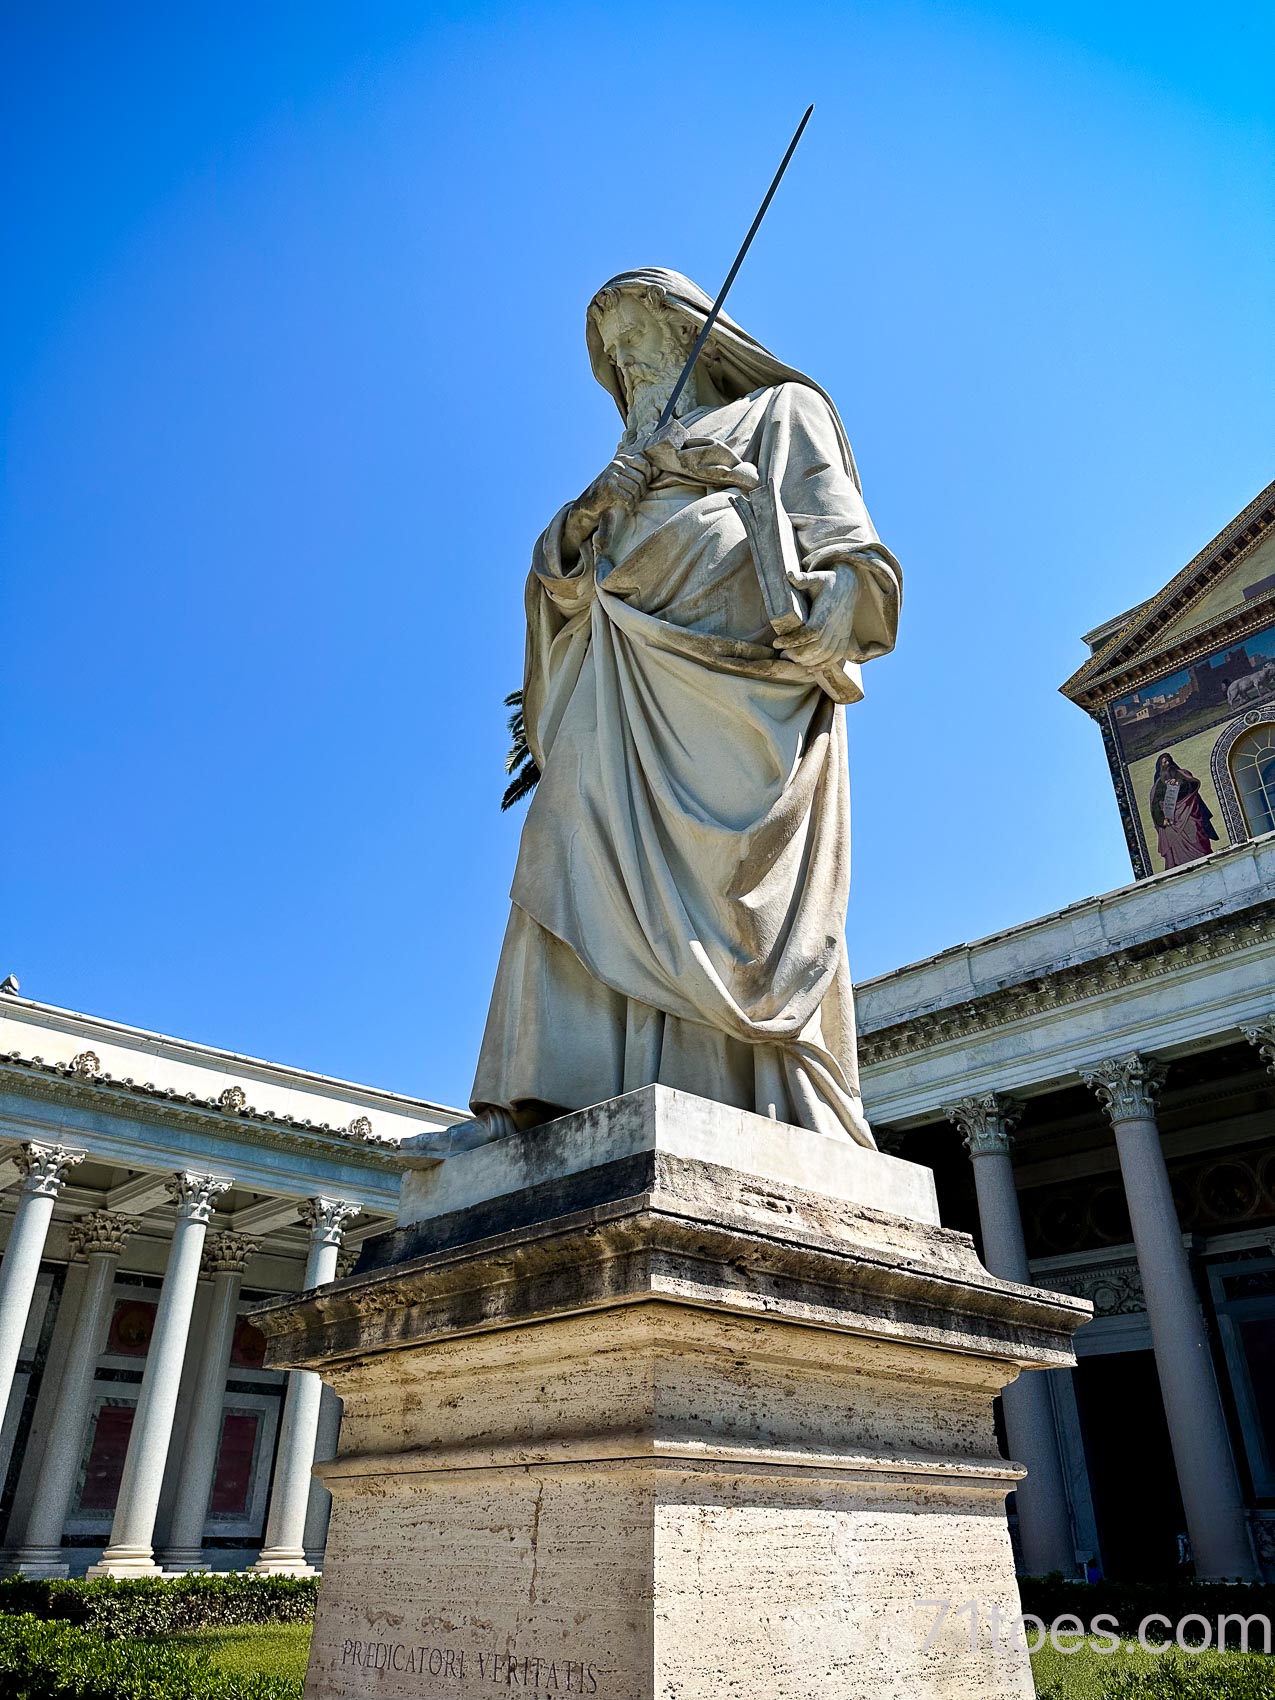 a statue of St. Paul